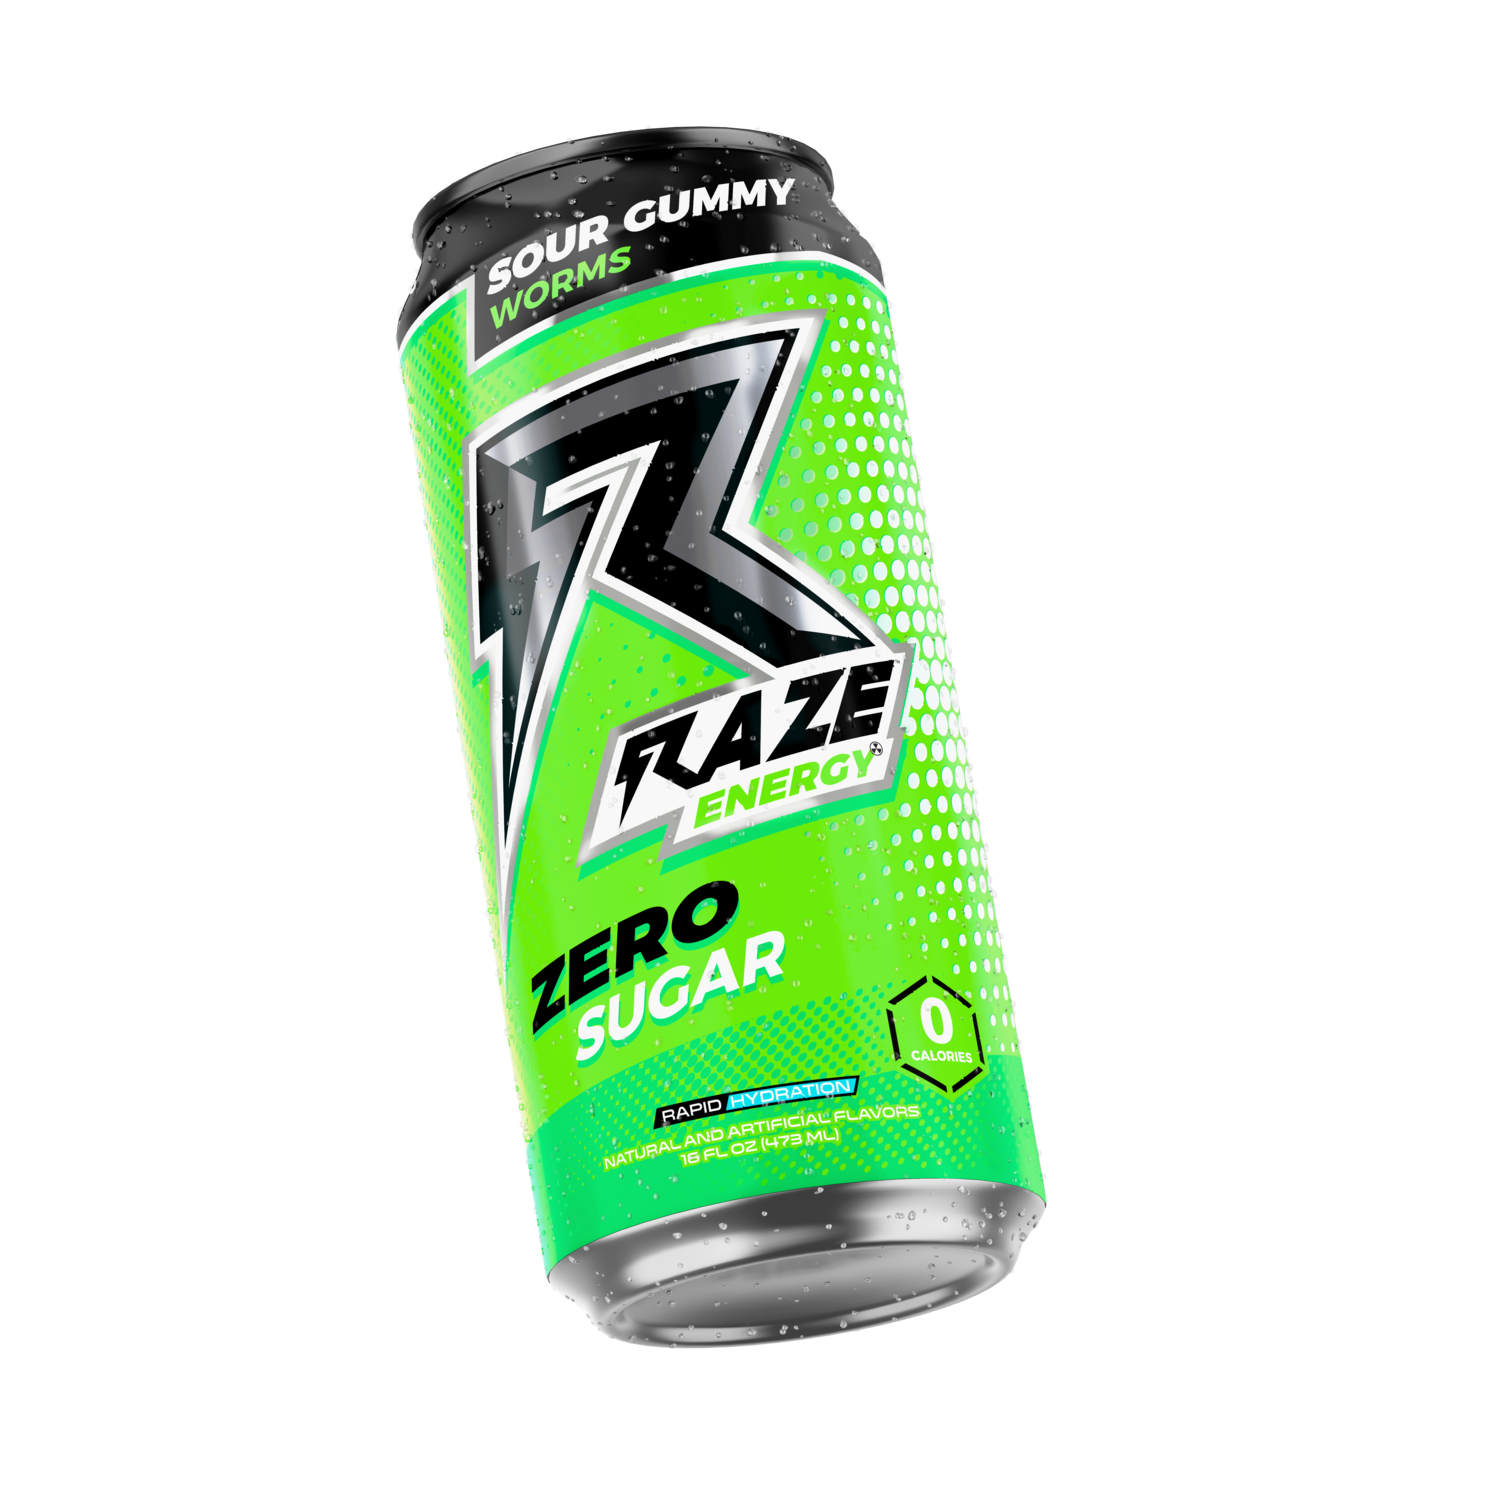 Raze Energy - Sour Gummy Worms 16oz. (One Can)